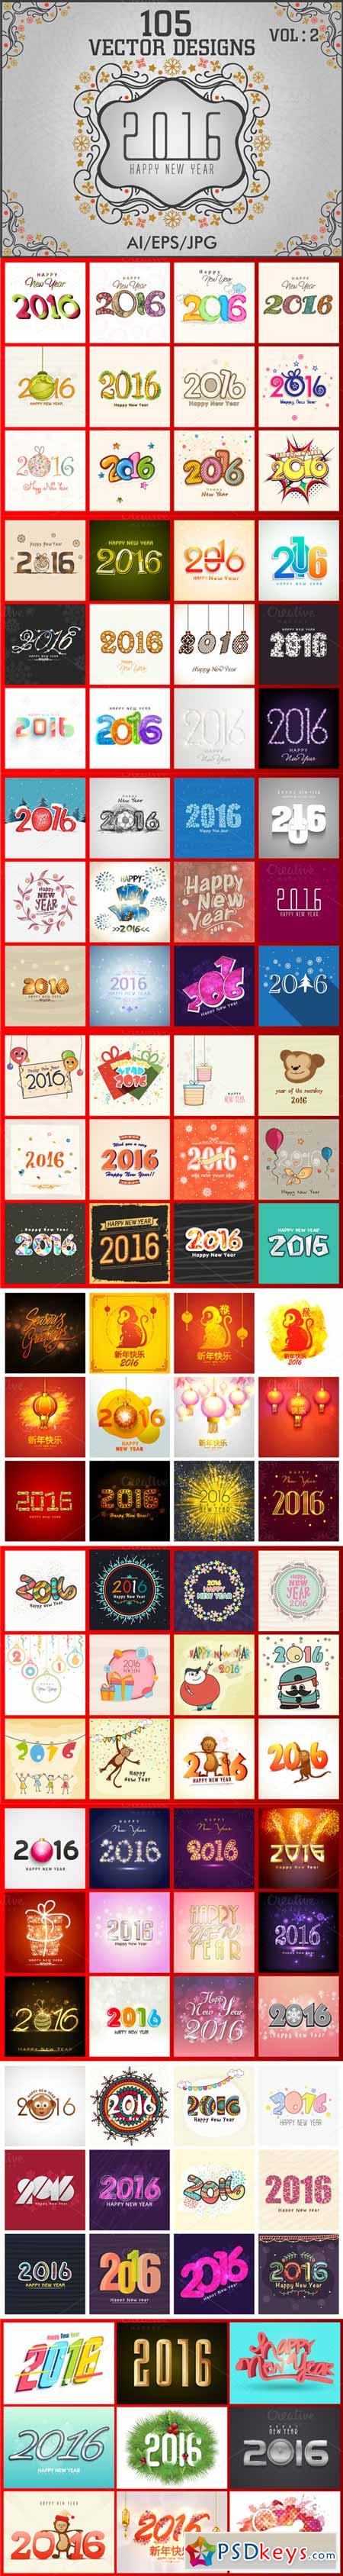 New Year 2016 Bundle - Vol 2 469281